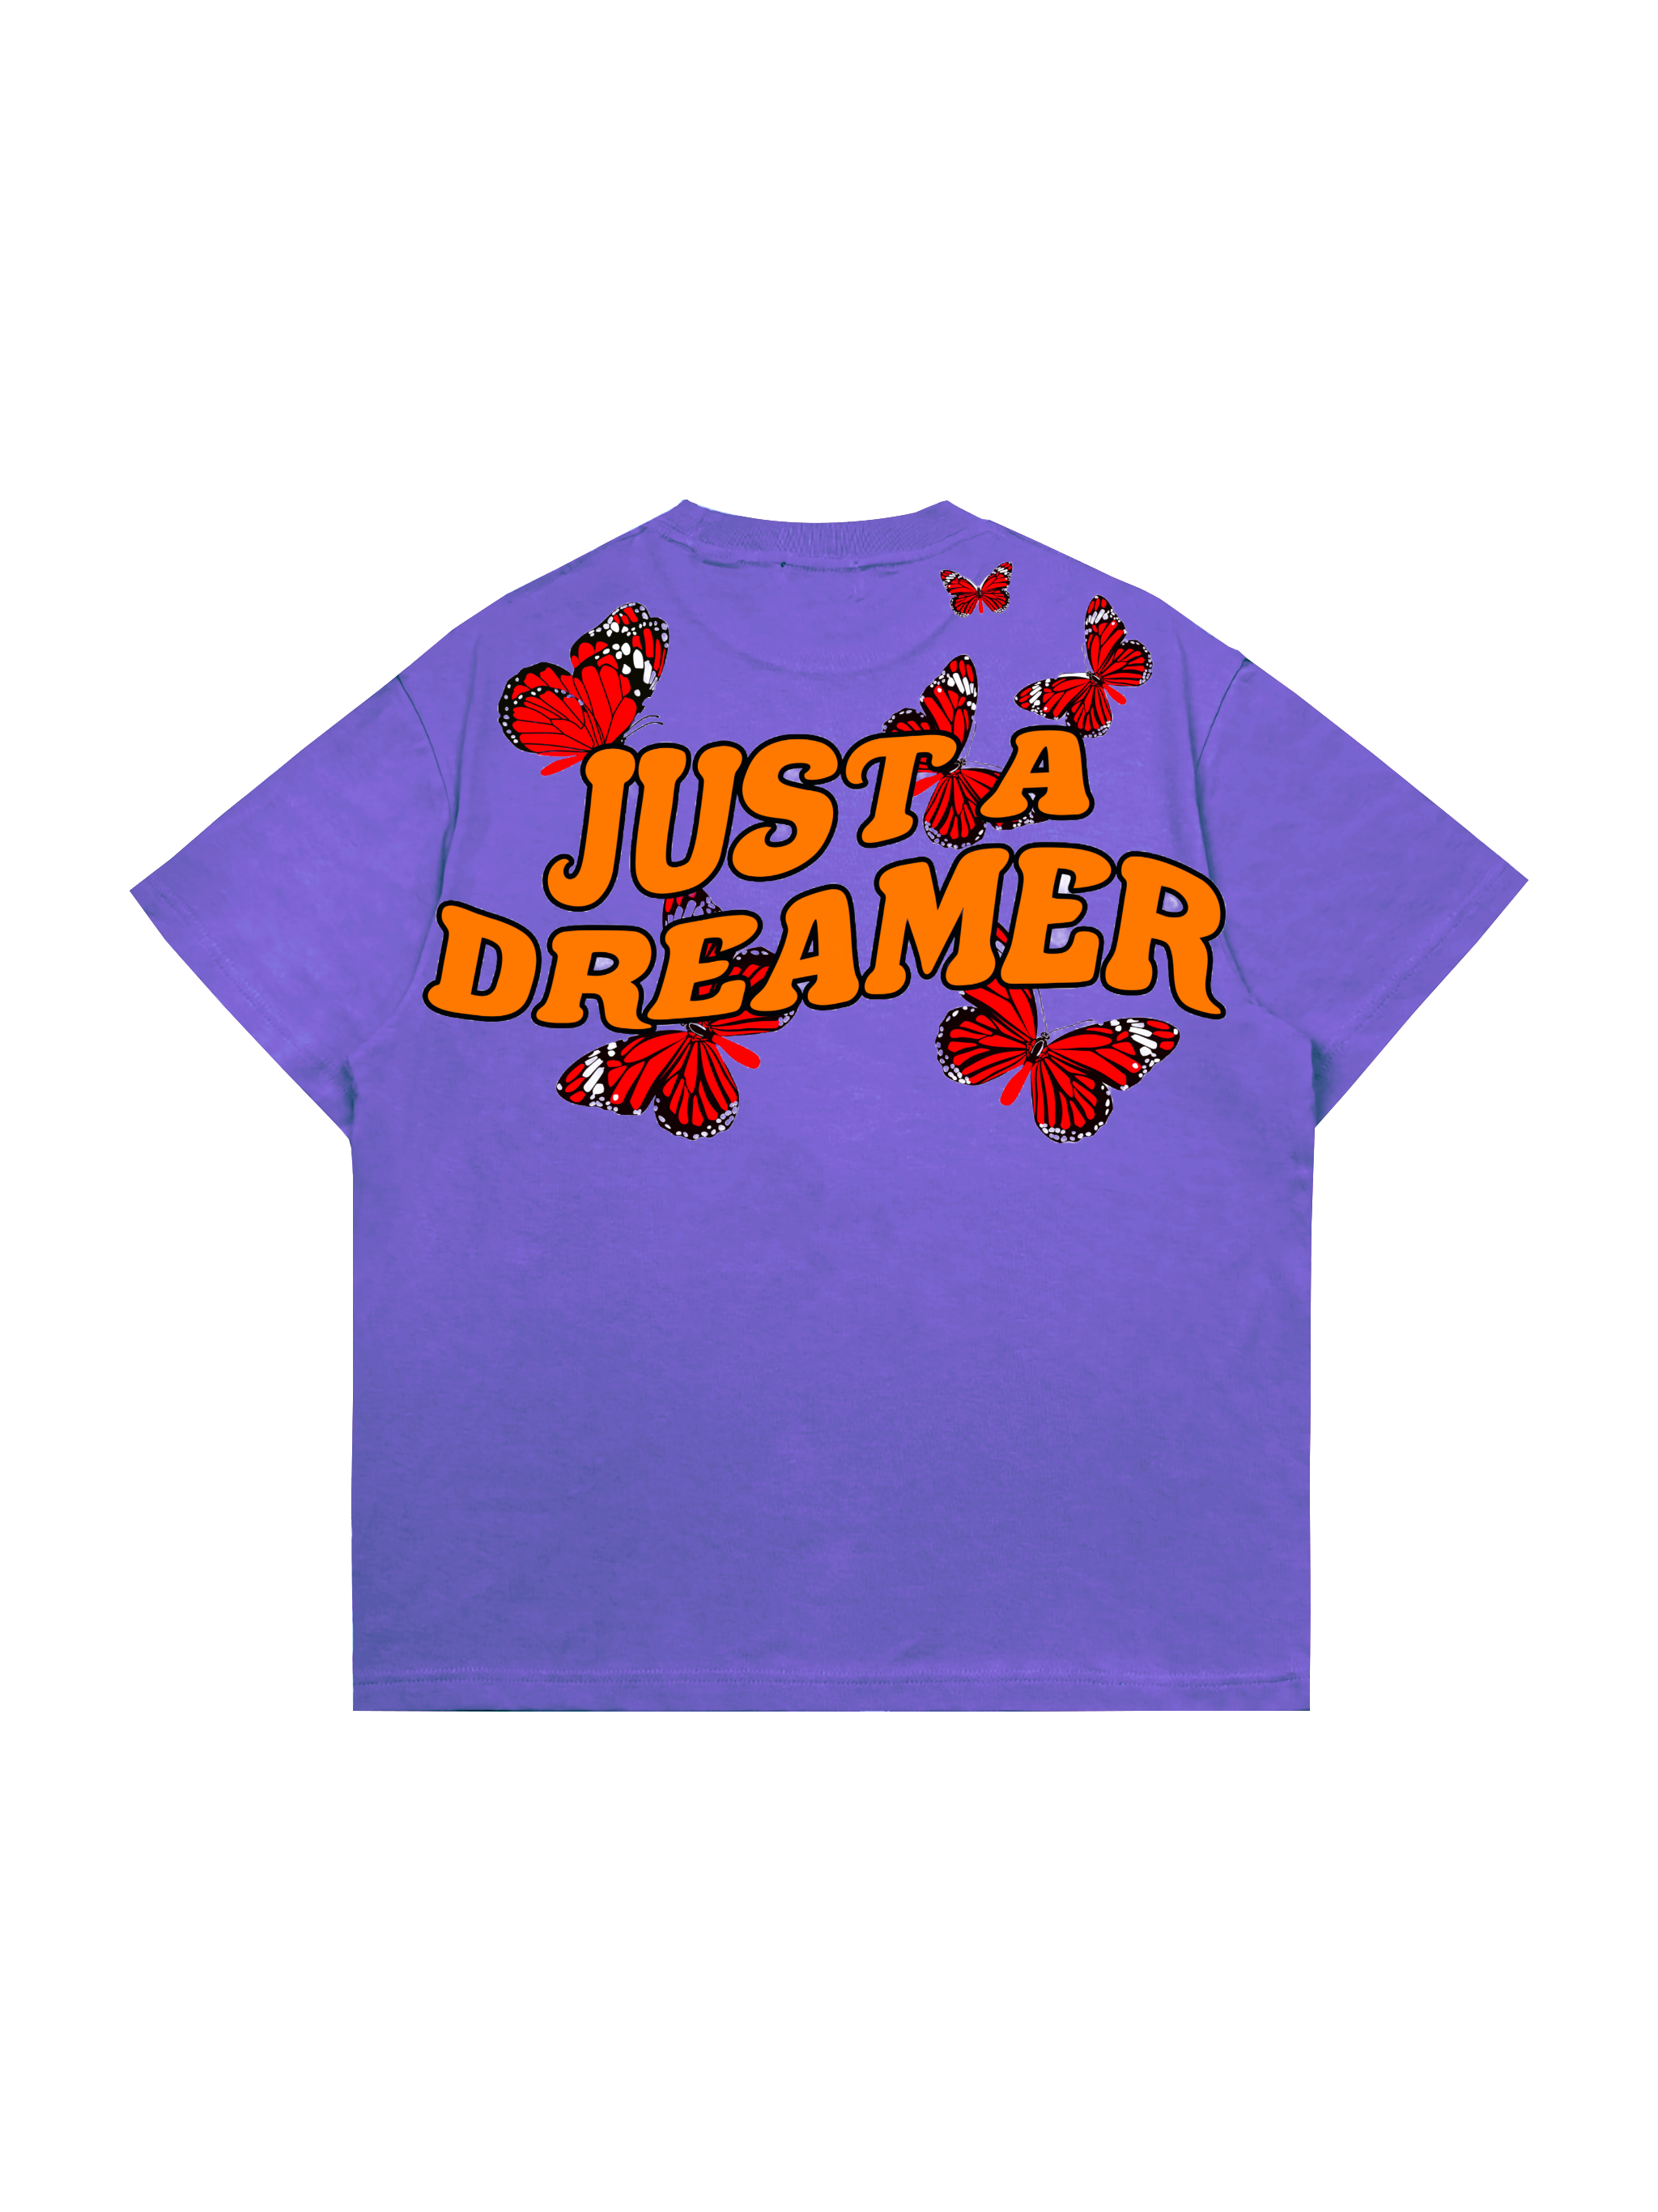 6. Dreamer Tee: "Just a Dreamer" Purple